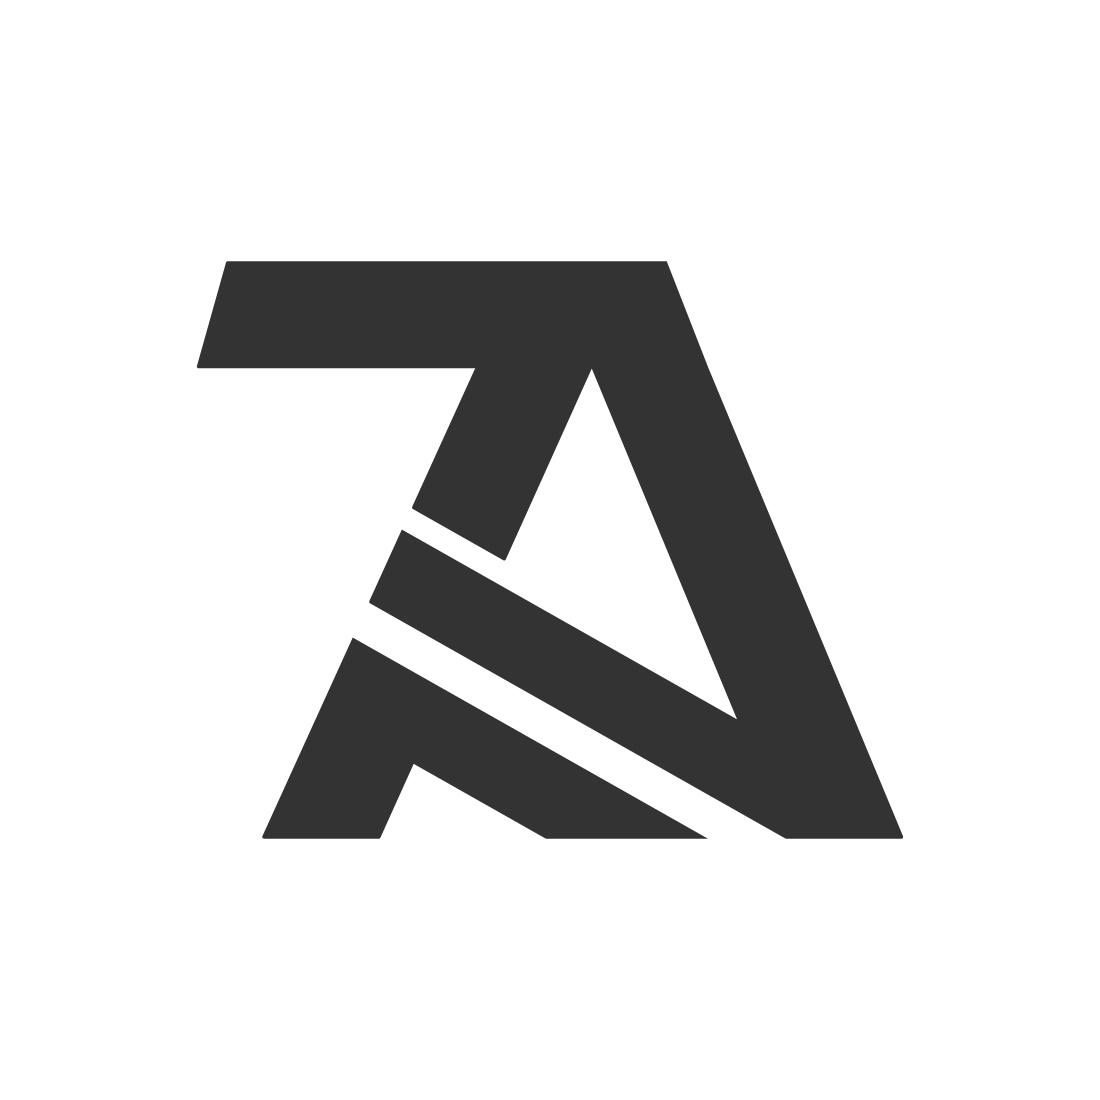 Abstract A letters logo design vector template arts 7A logo design Black color images AZ logo monogram brand icon design A logo design preview image.